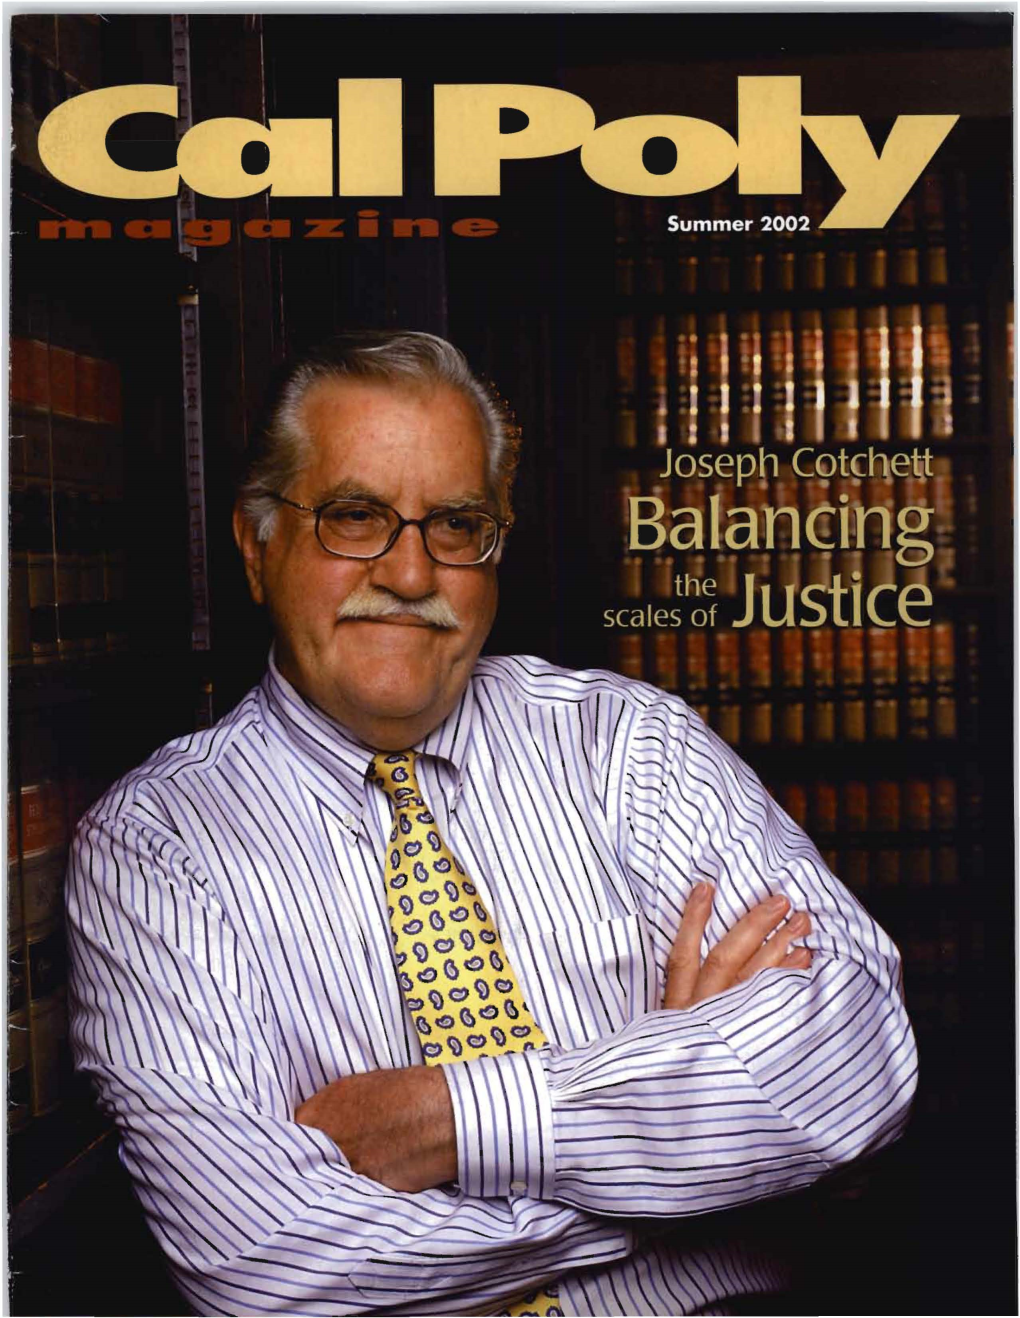 Cal Poly Magazine, Summer 2002